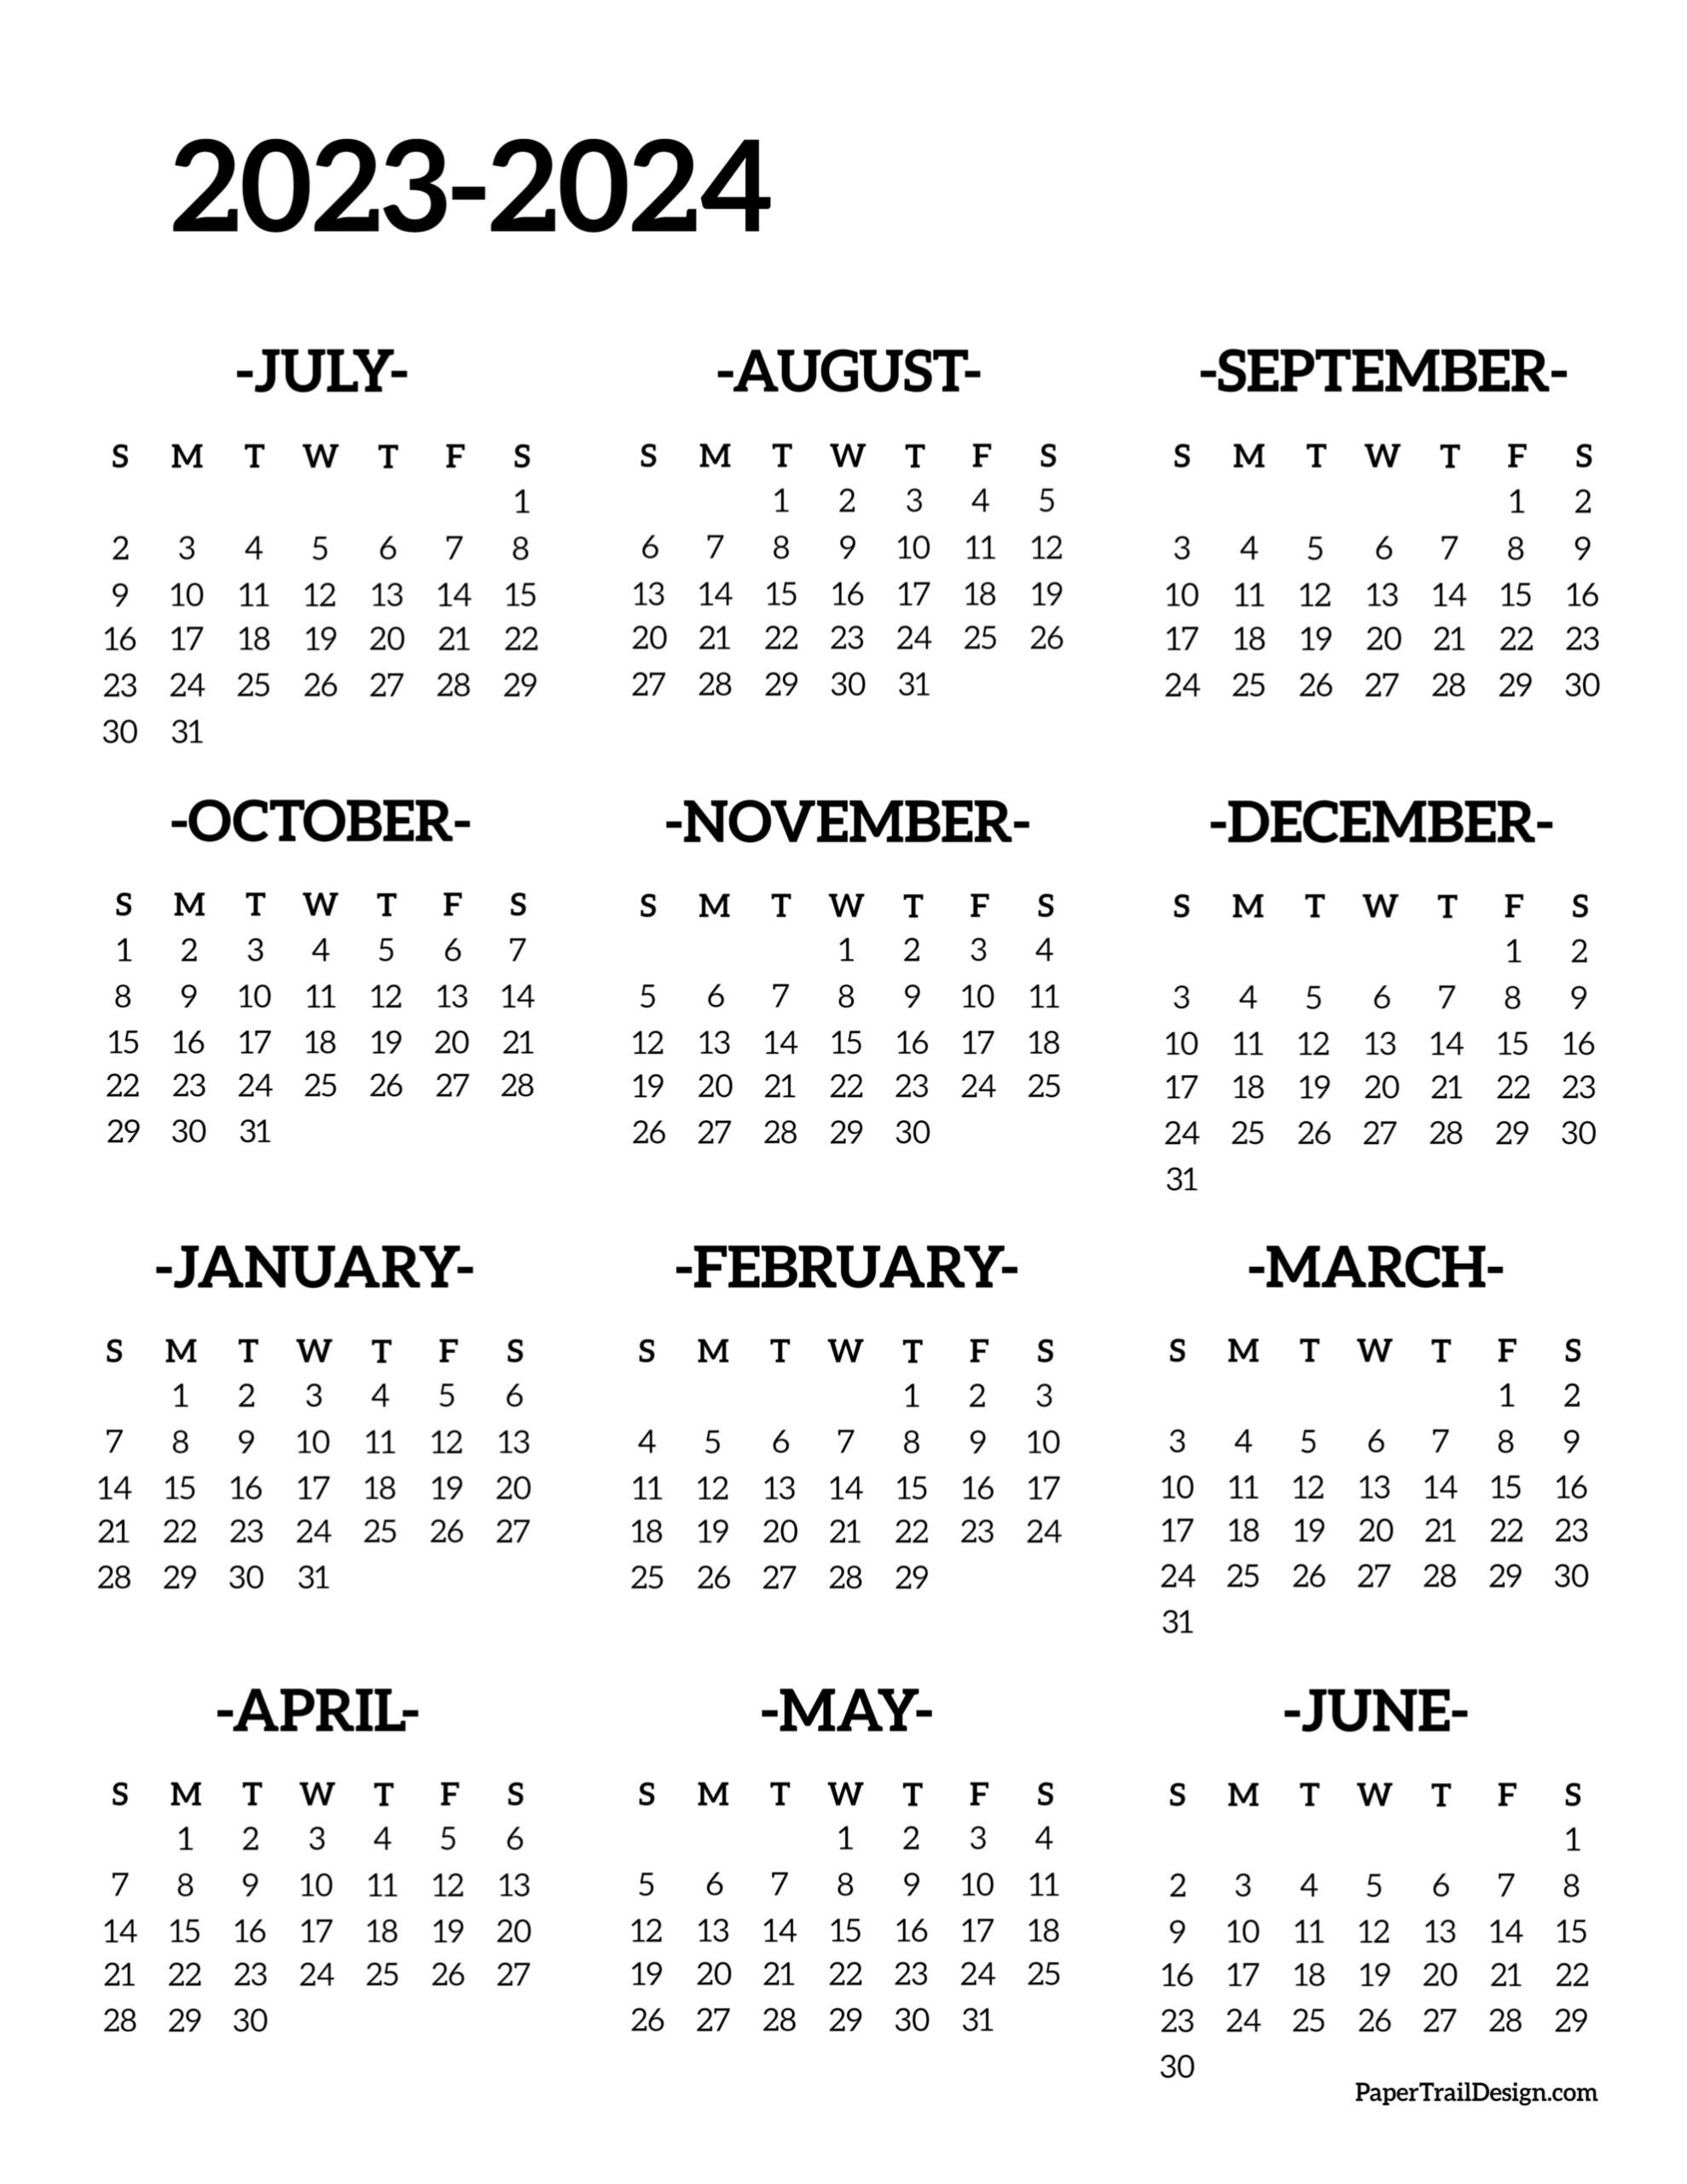 2023-2024 School Year Calendar Free Printable - Paper Trail Design for Calendar Printable 2023 2024